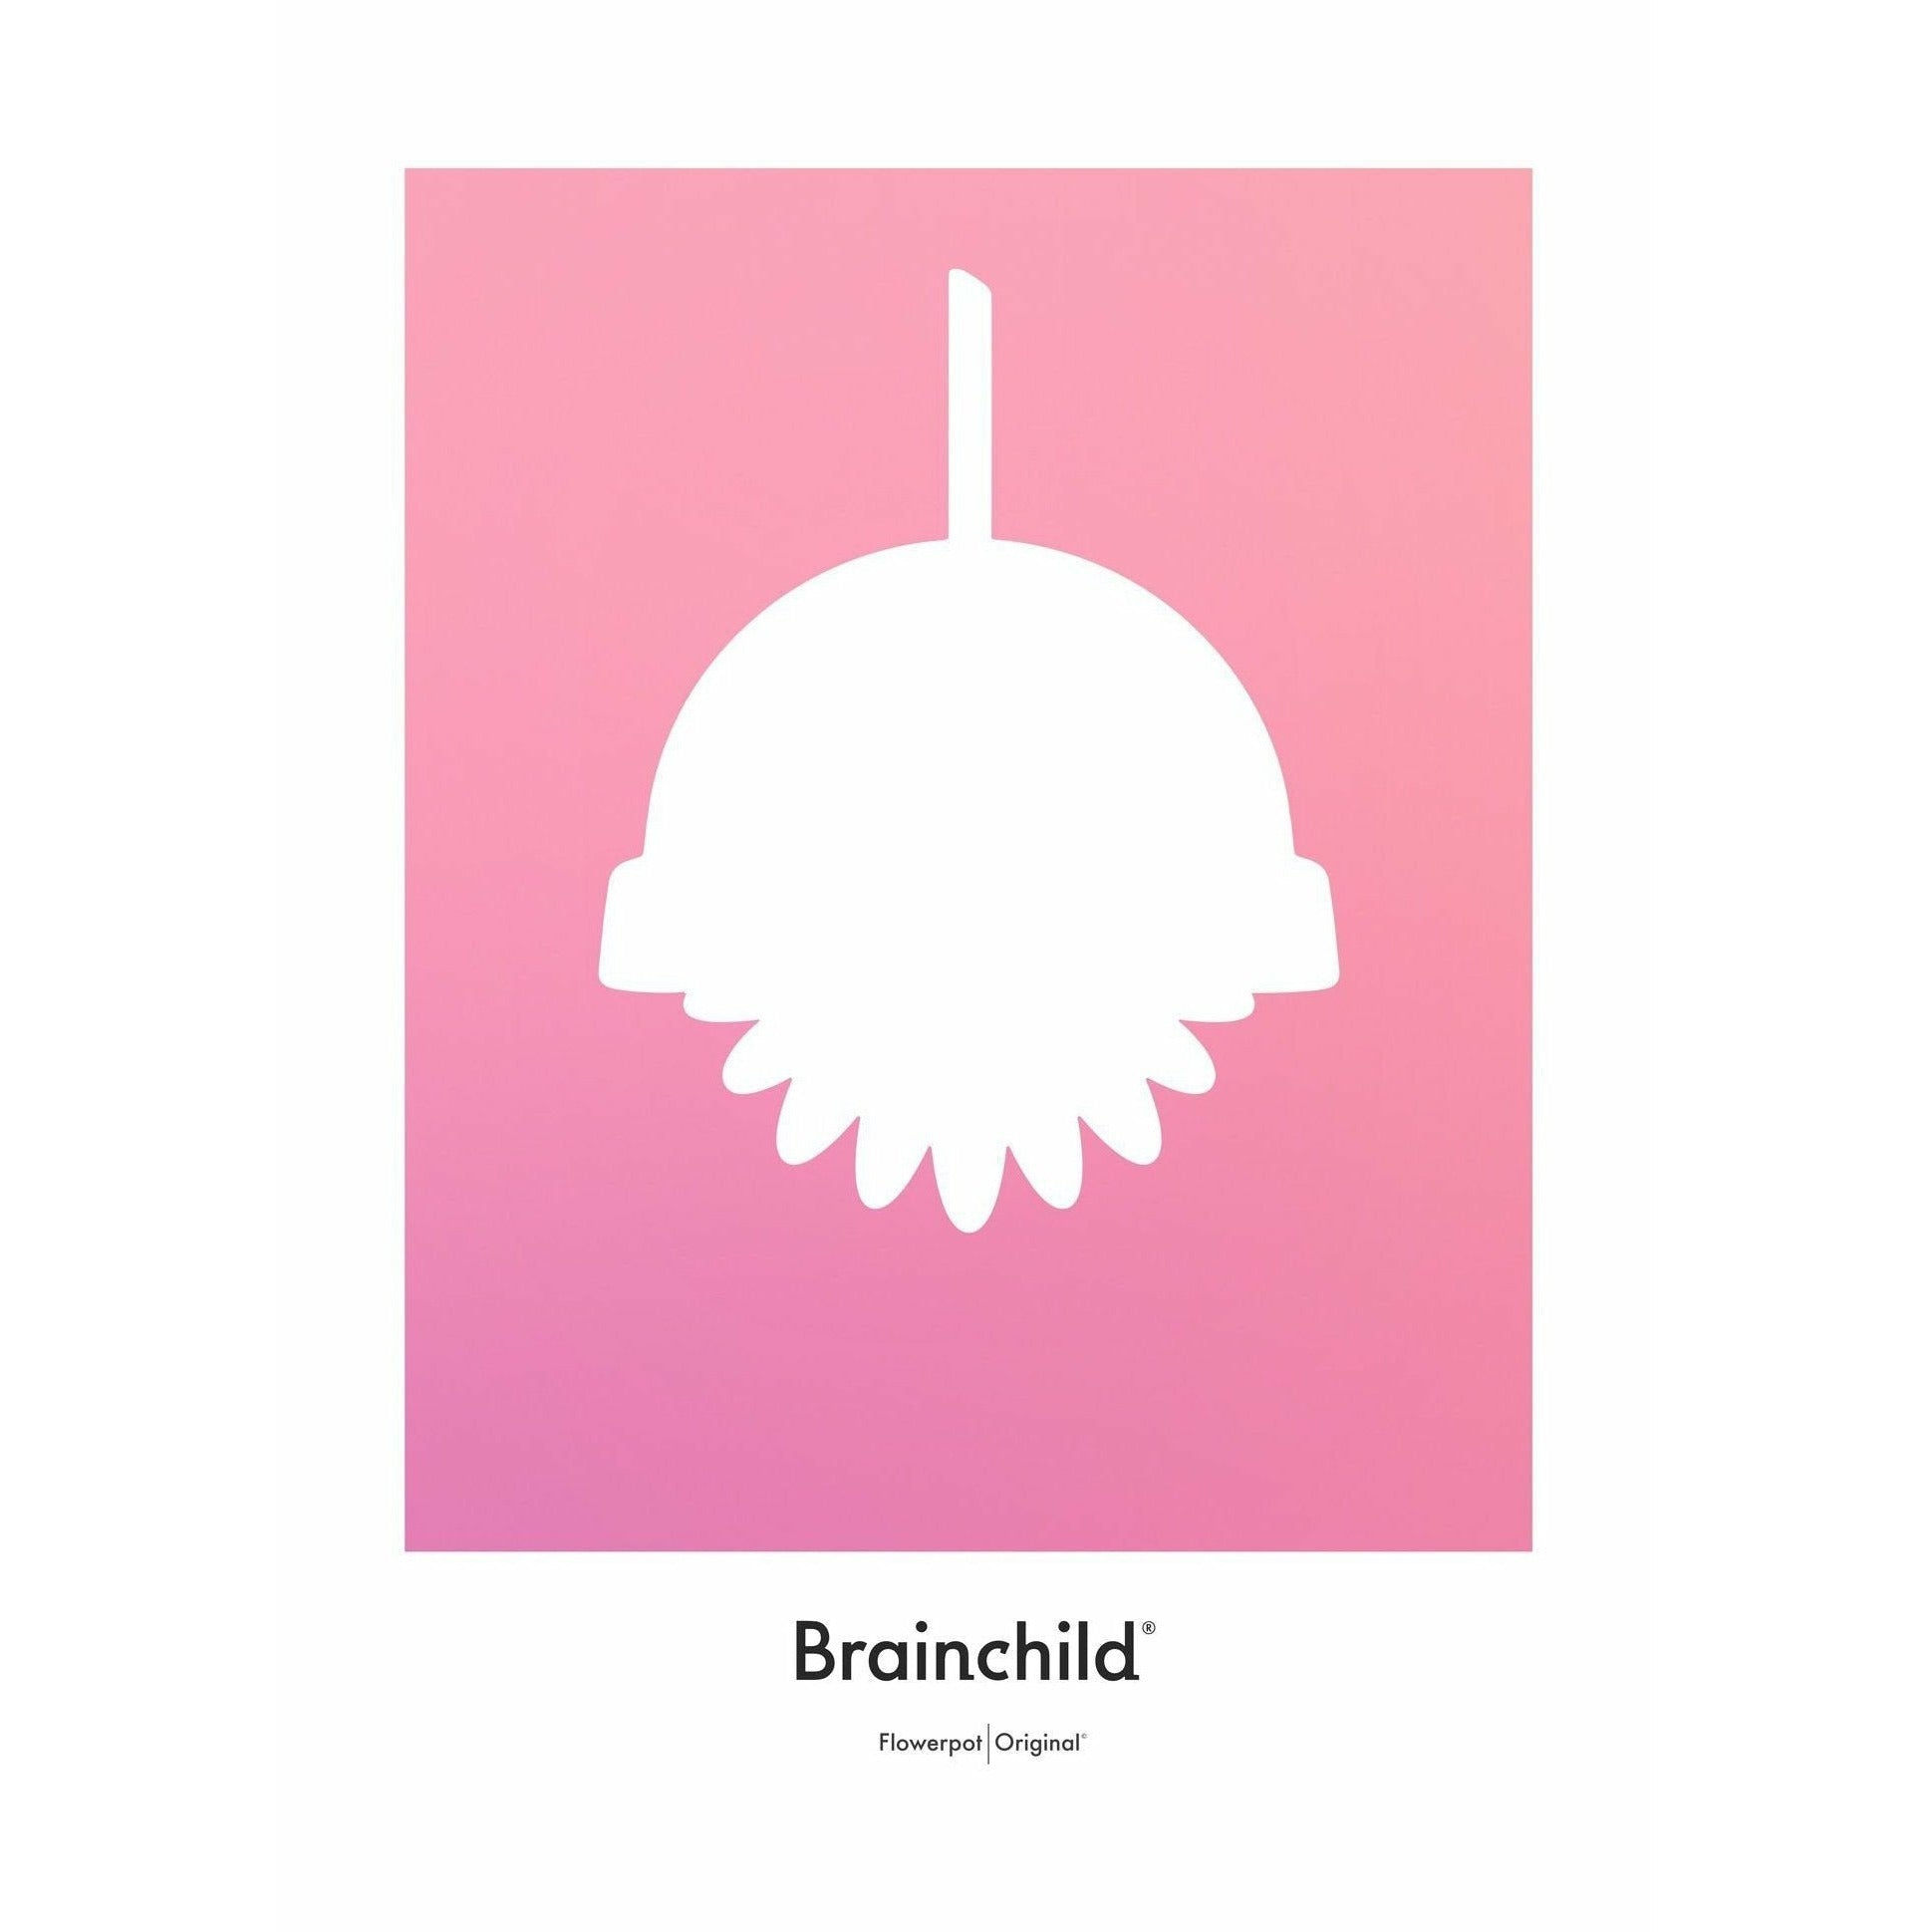 Brainchild Flowerpot Design Icon Poster Without Frame 50 X70 Cm, Pink